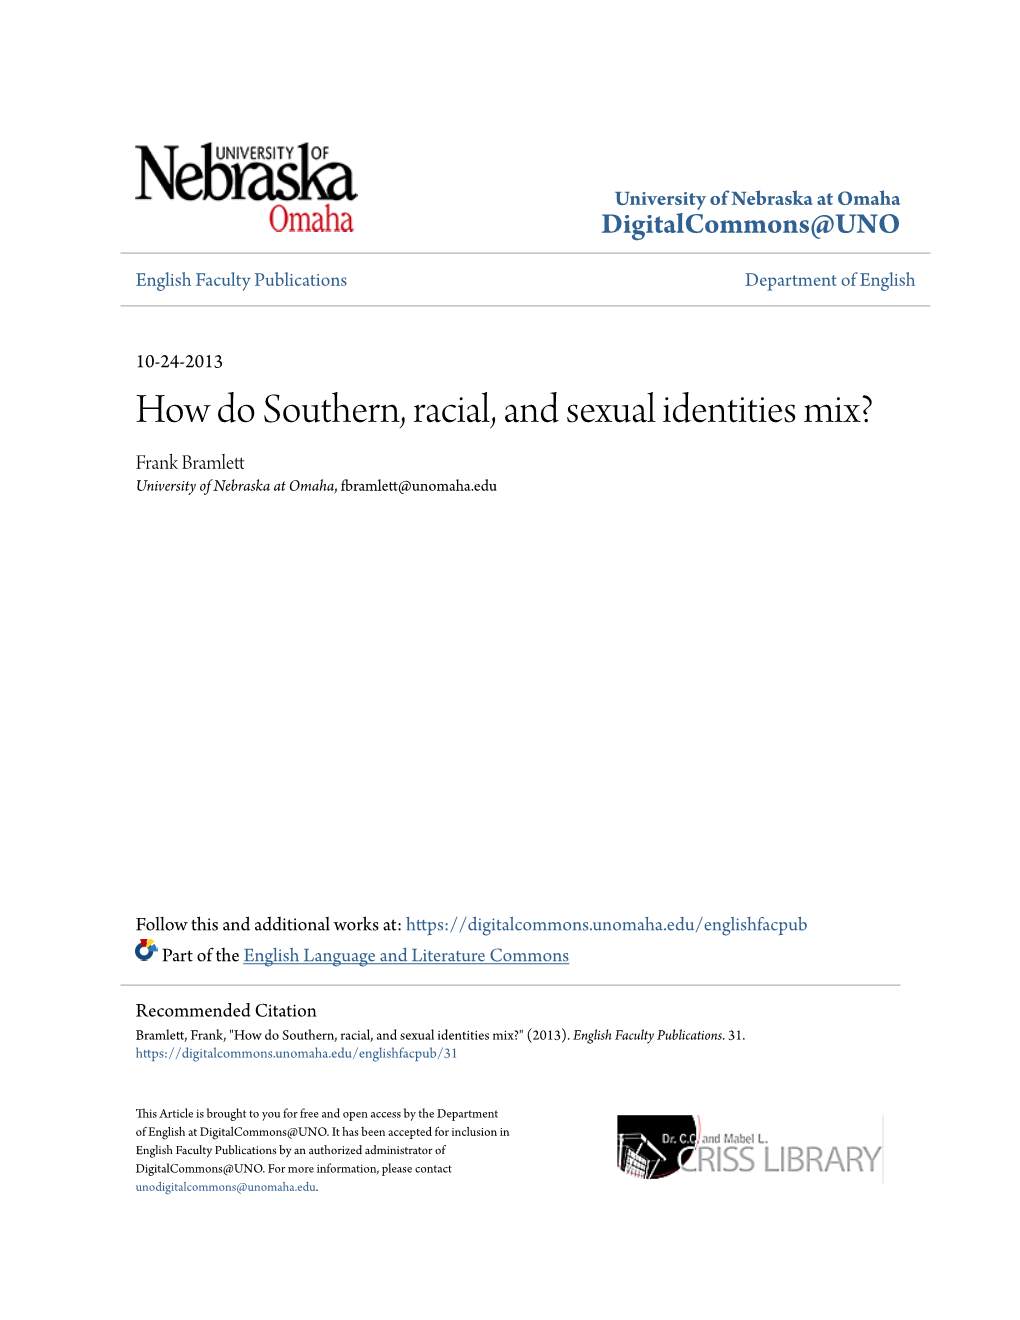 How Do Southern, Racial, and Sexual Identities Mix? Frank Bramlett University of Nebraska at Omaha, Fbramlett@Unomaha.Edu